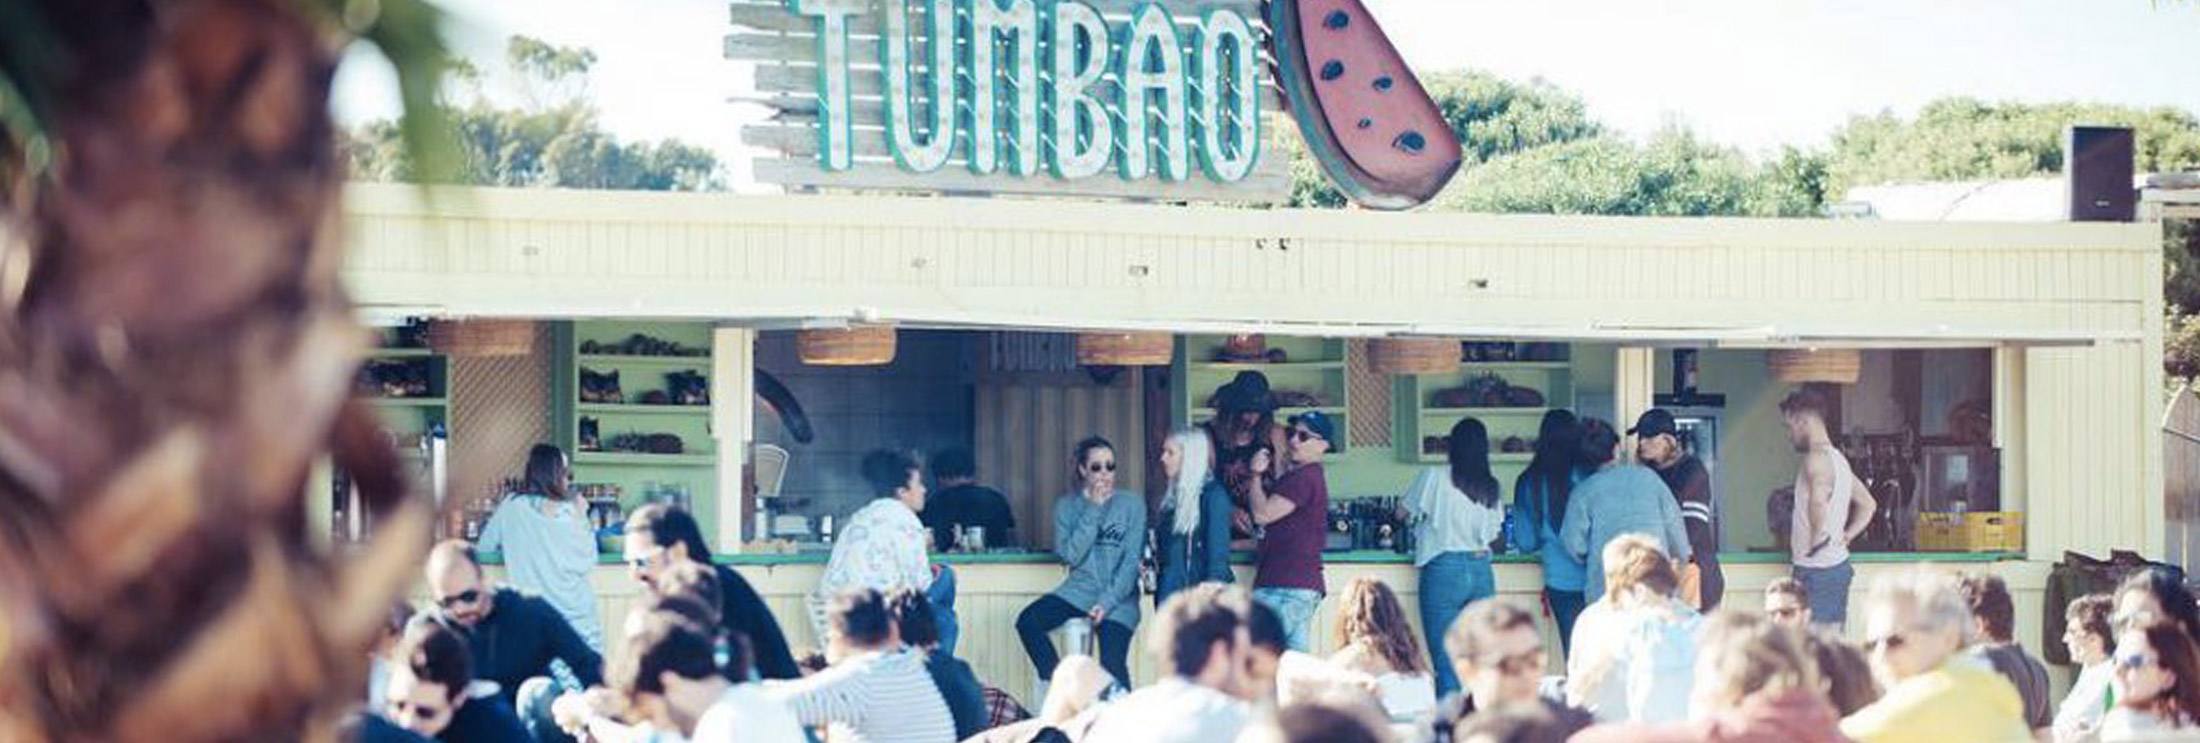 Tumbao-chiringuito-beach-bar-playa-kitespot-valdevaqueros-tarifa